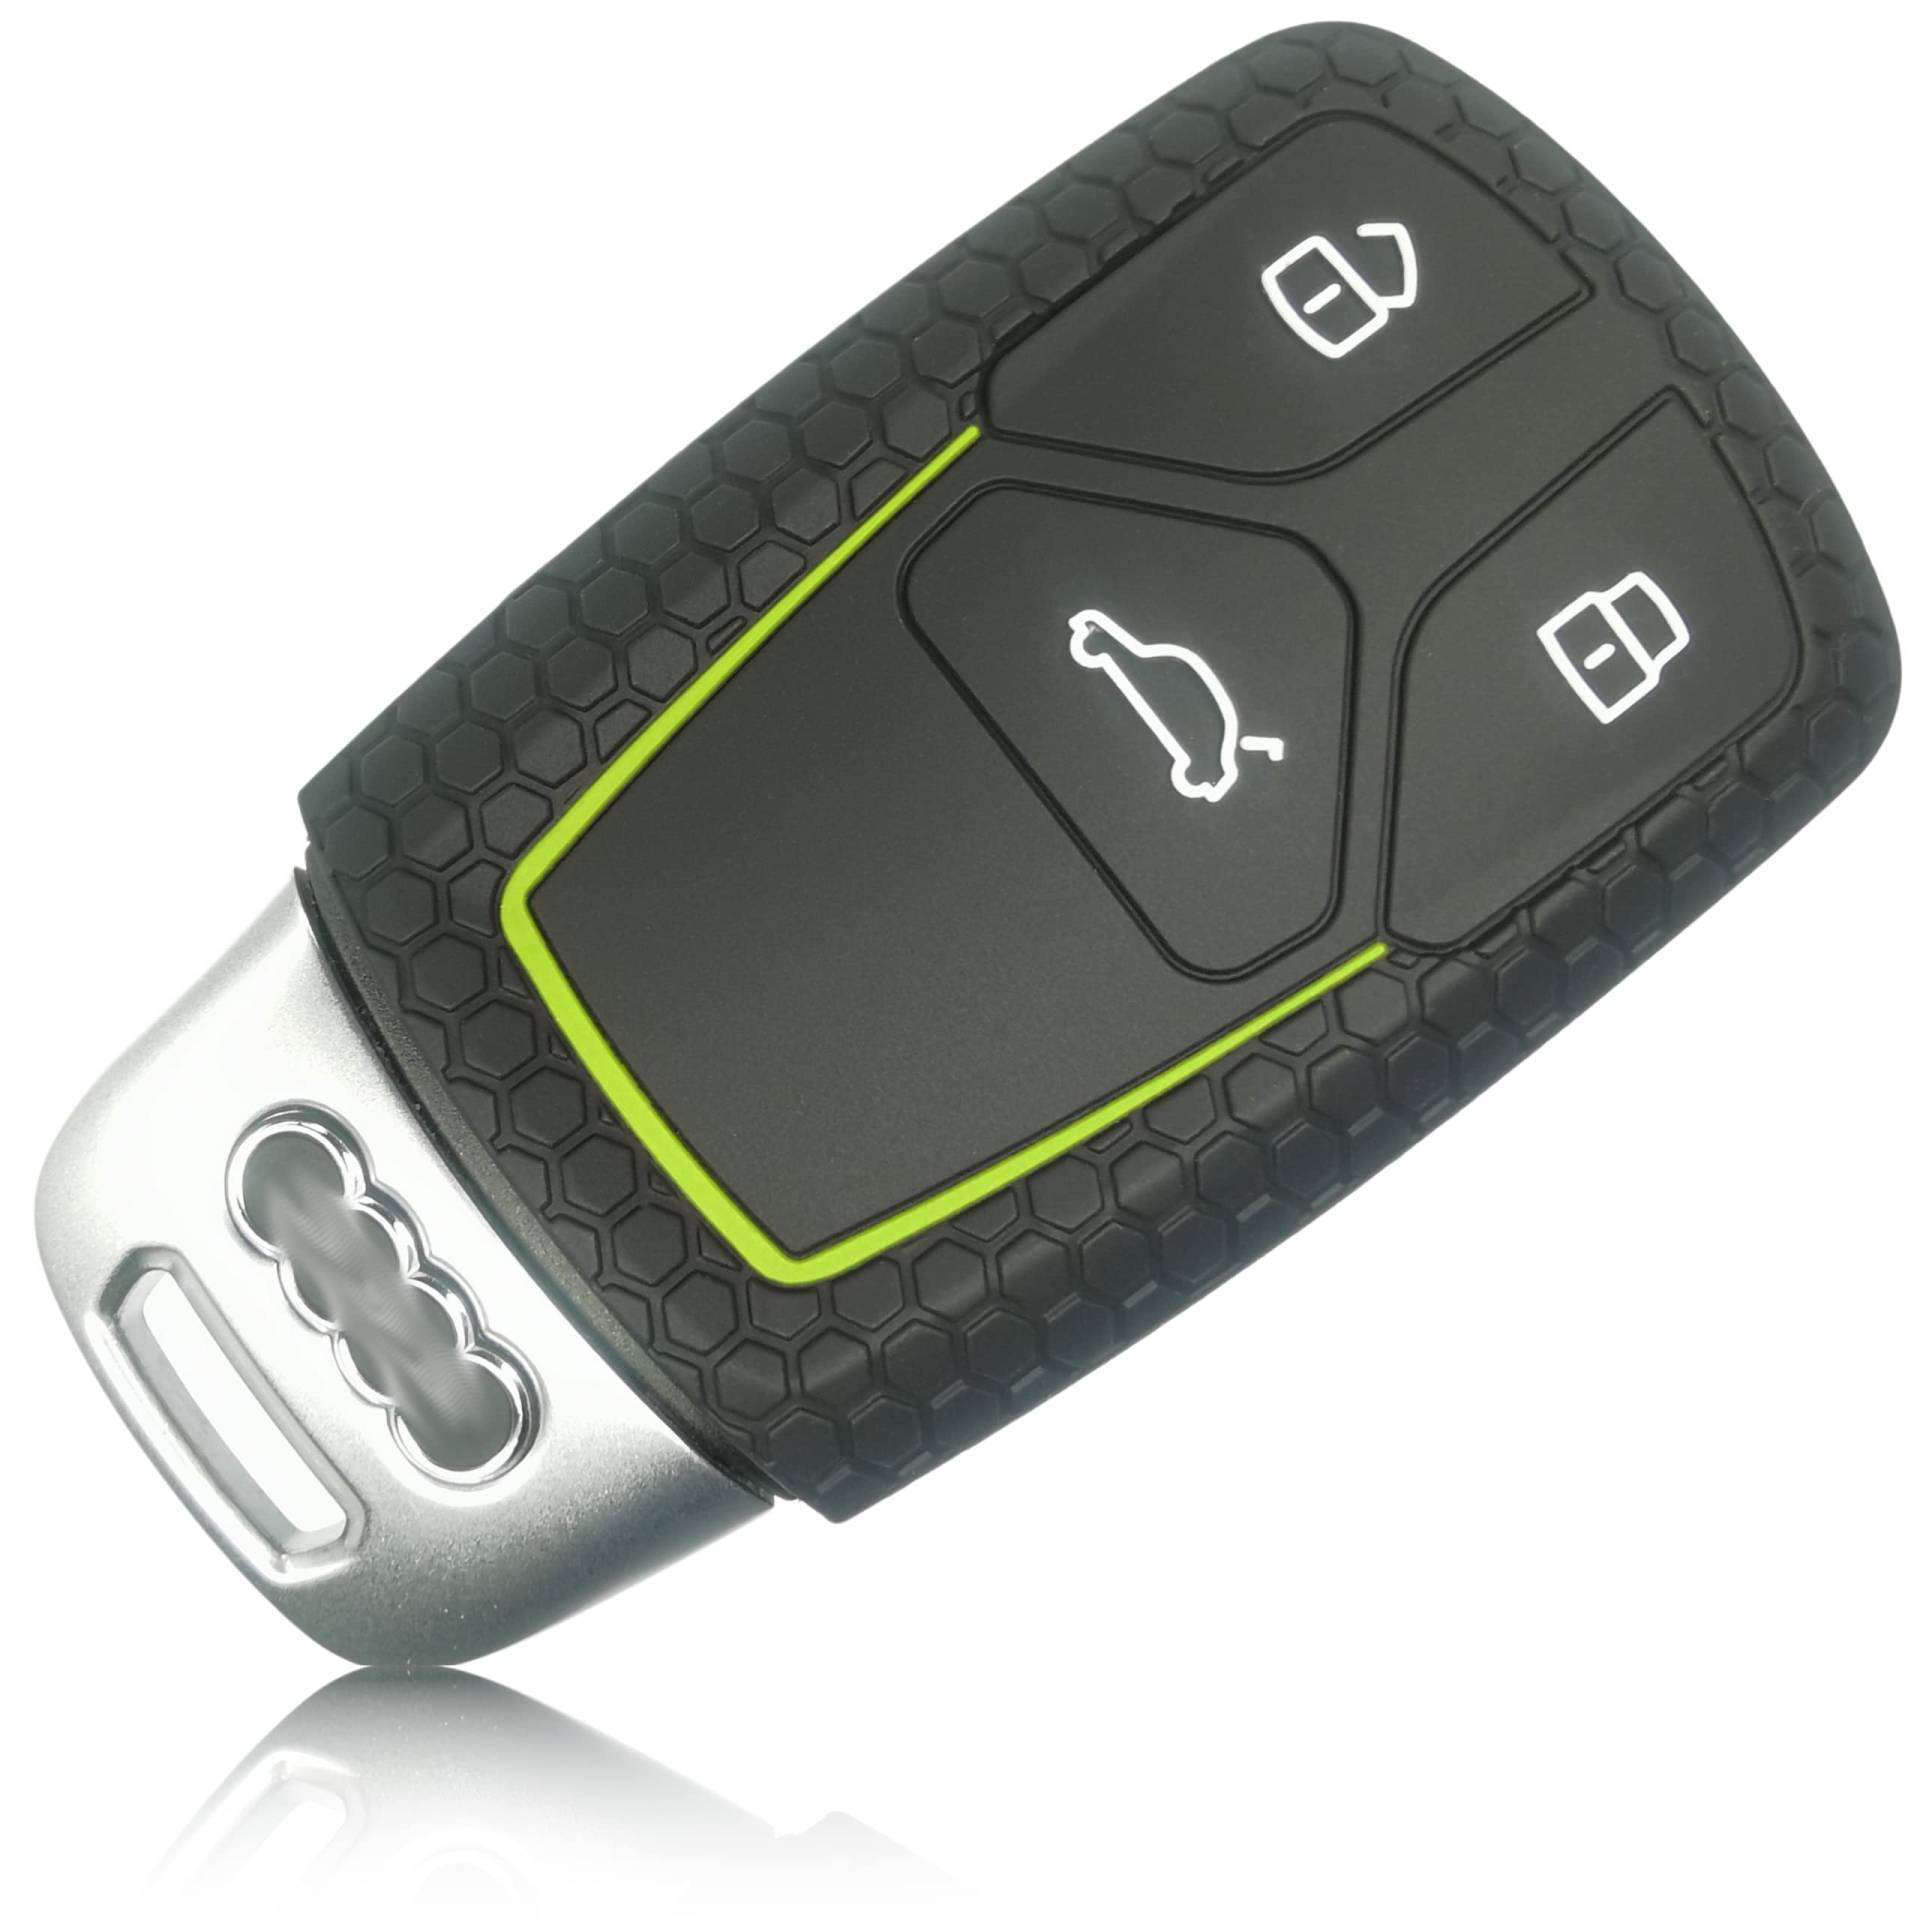 FOAMO Autoschlüssel Hülle kompatibel mit Audi 3-Tasten (Keyless-Go) - Silikon Schutzhülle Cover Schlüssel-Hülle in Schwarz-Grün von FOAMO